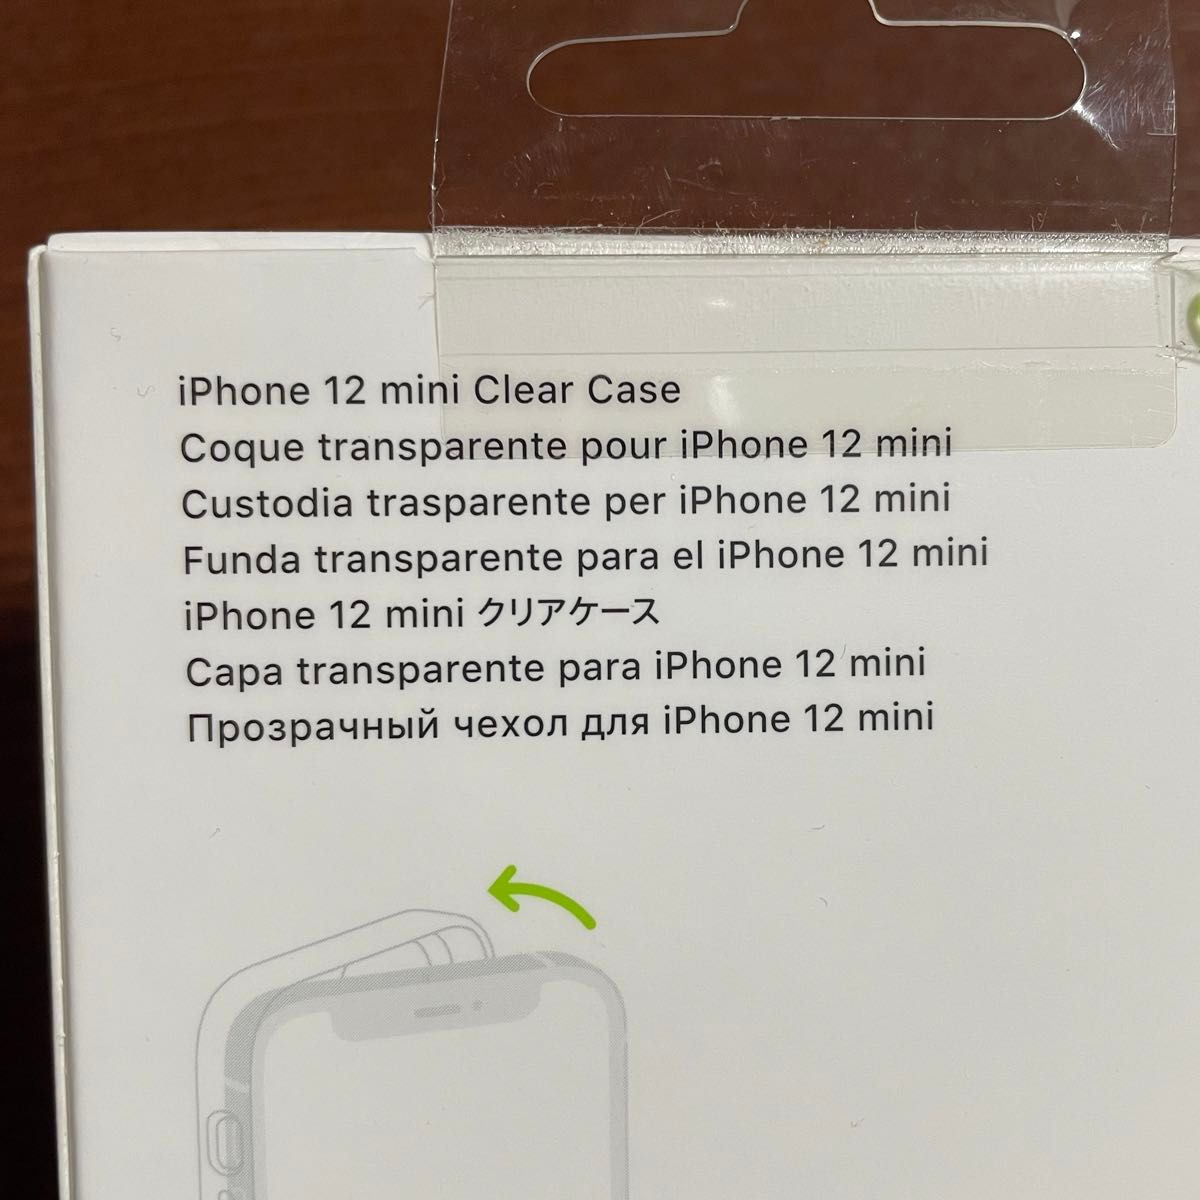 Apple純正品【新品未使用】MagSafe対応 iPhone 12 mini クリアケース